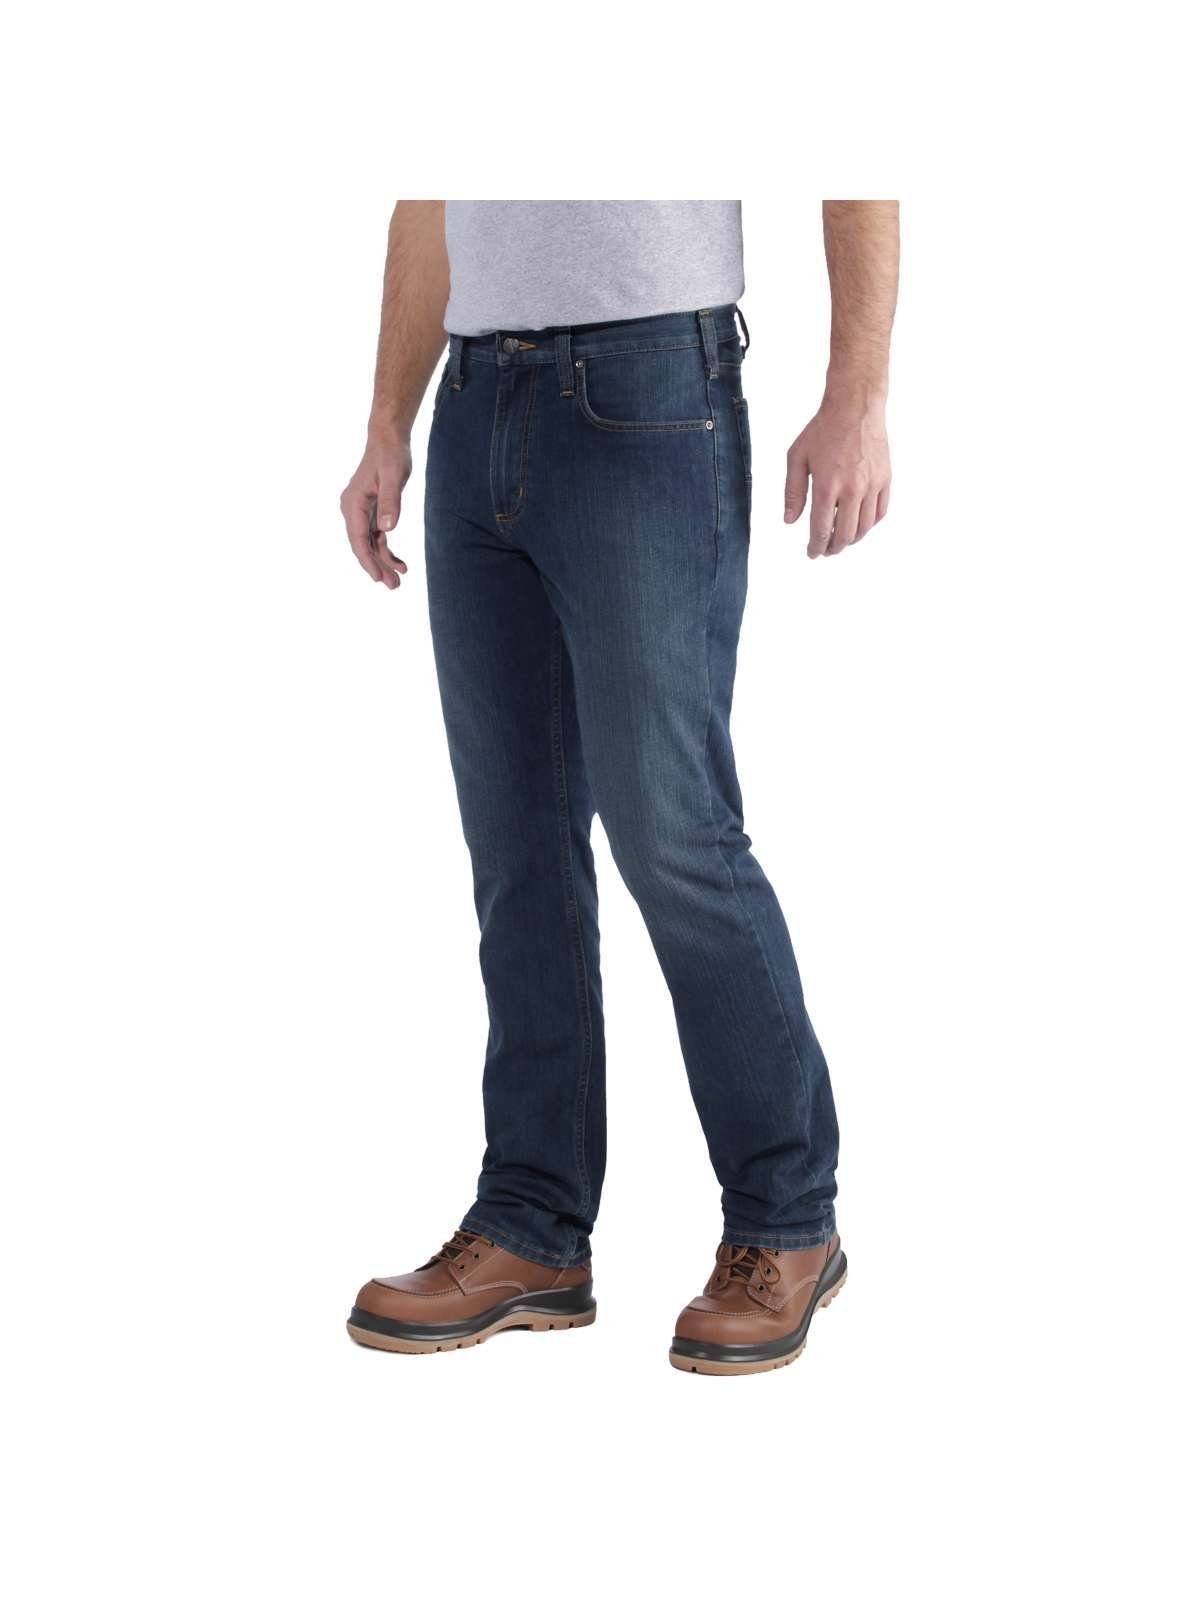 Carhartt Arbeitshose Carhartt Jeans superior Flex Rugged dunkelblau